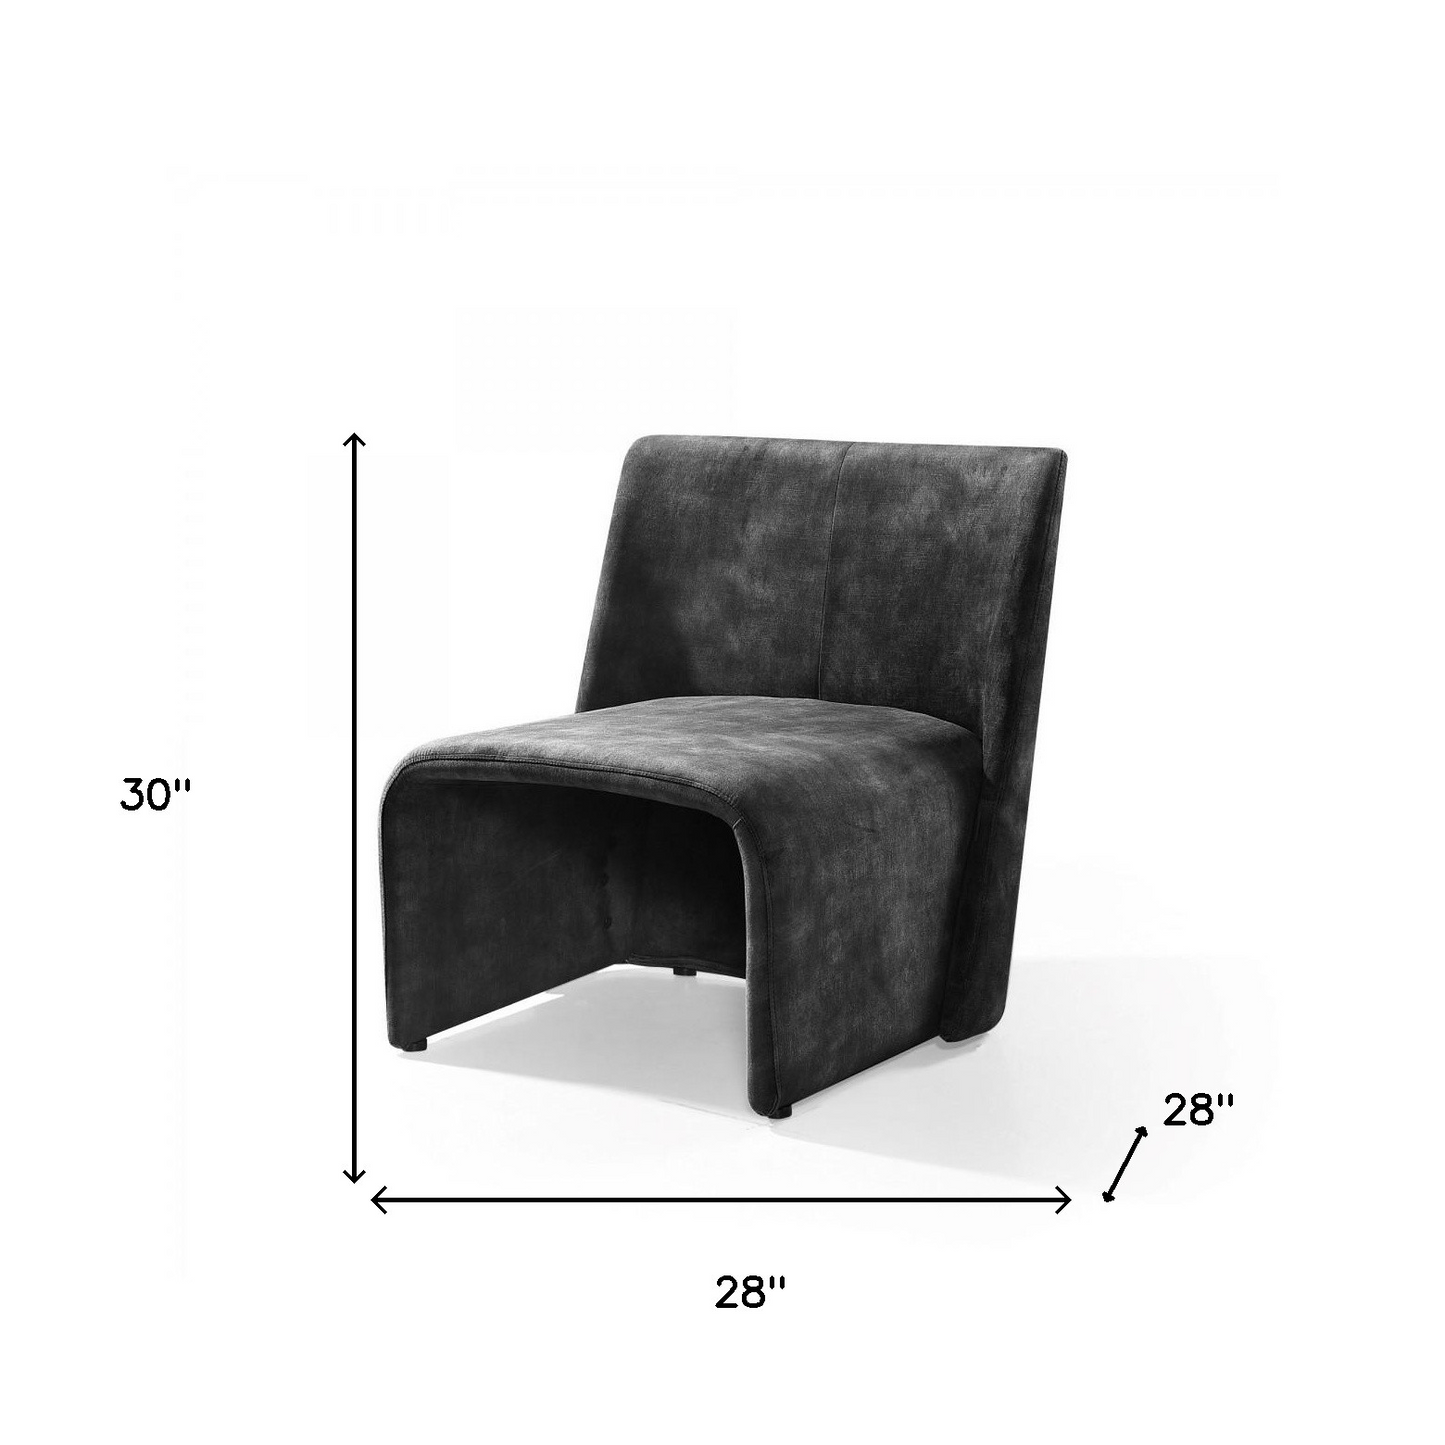 "28"" Dark Grey Velvet Solid Color Side Chair"